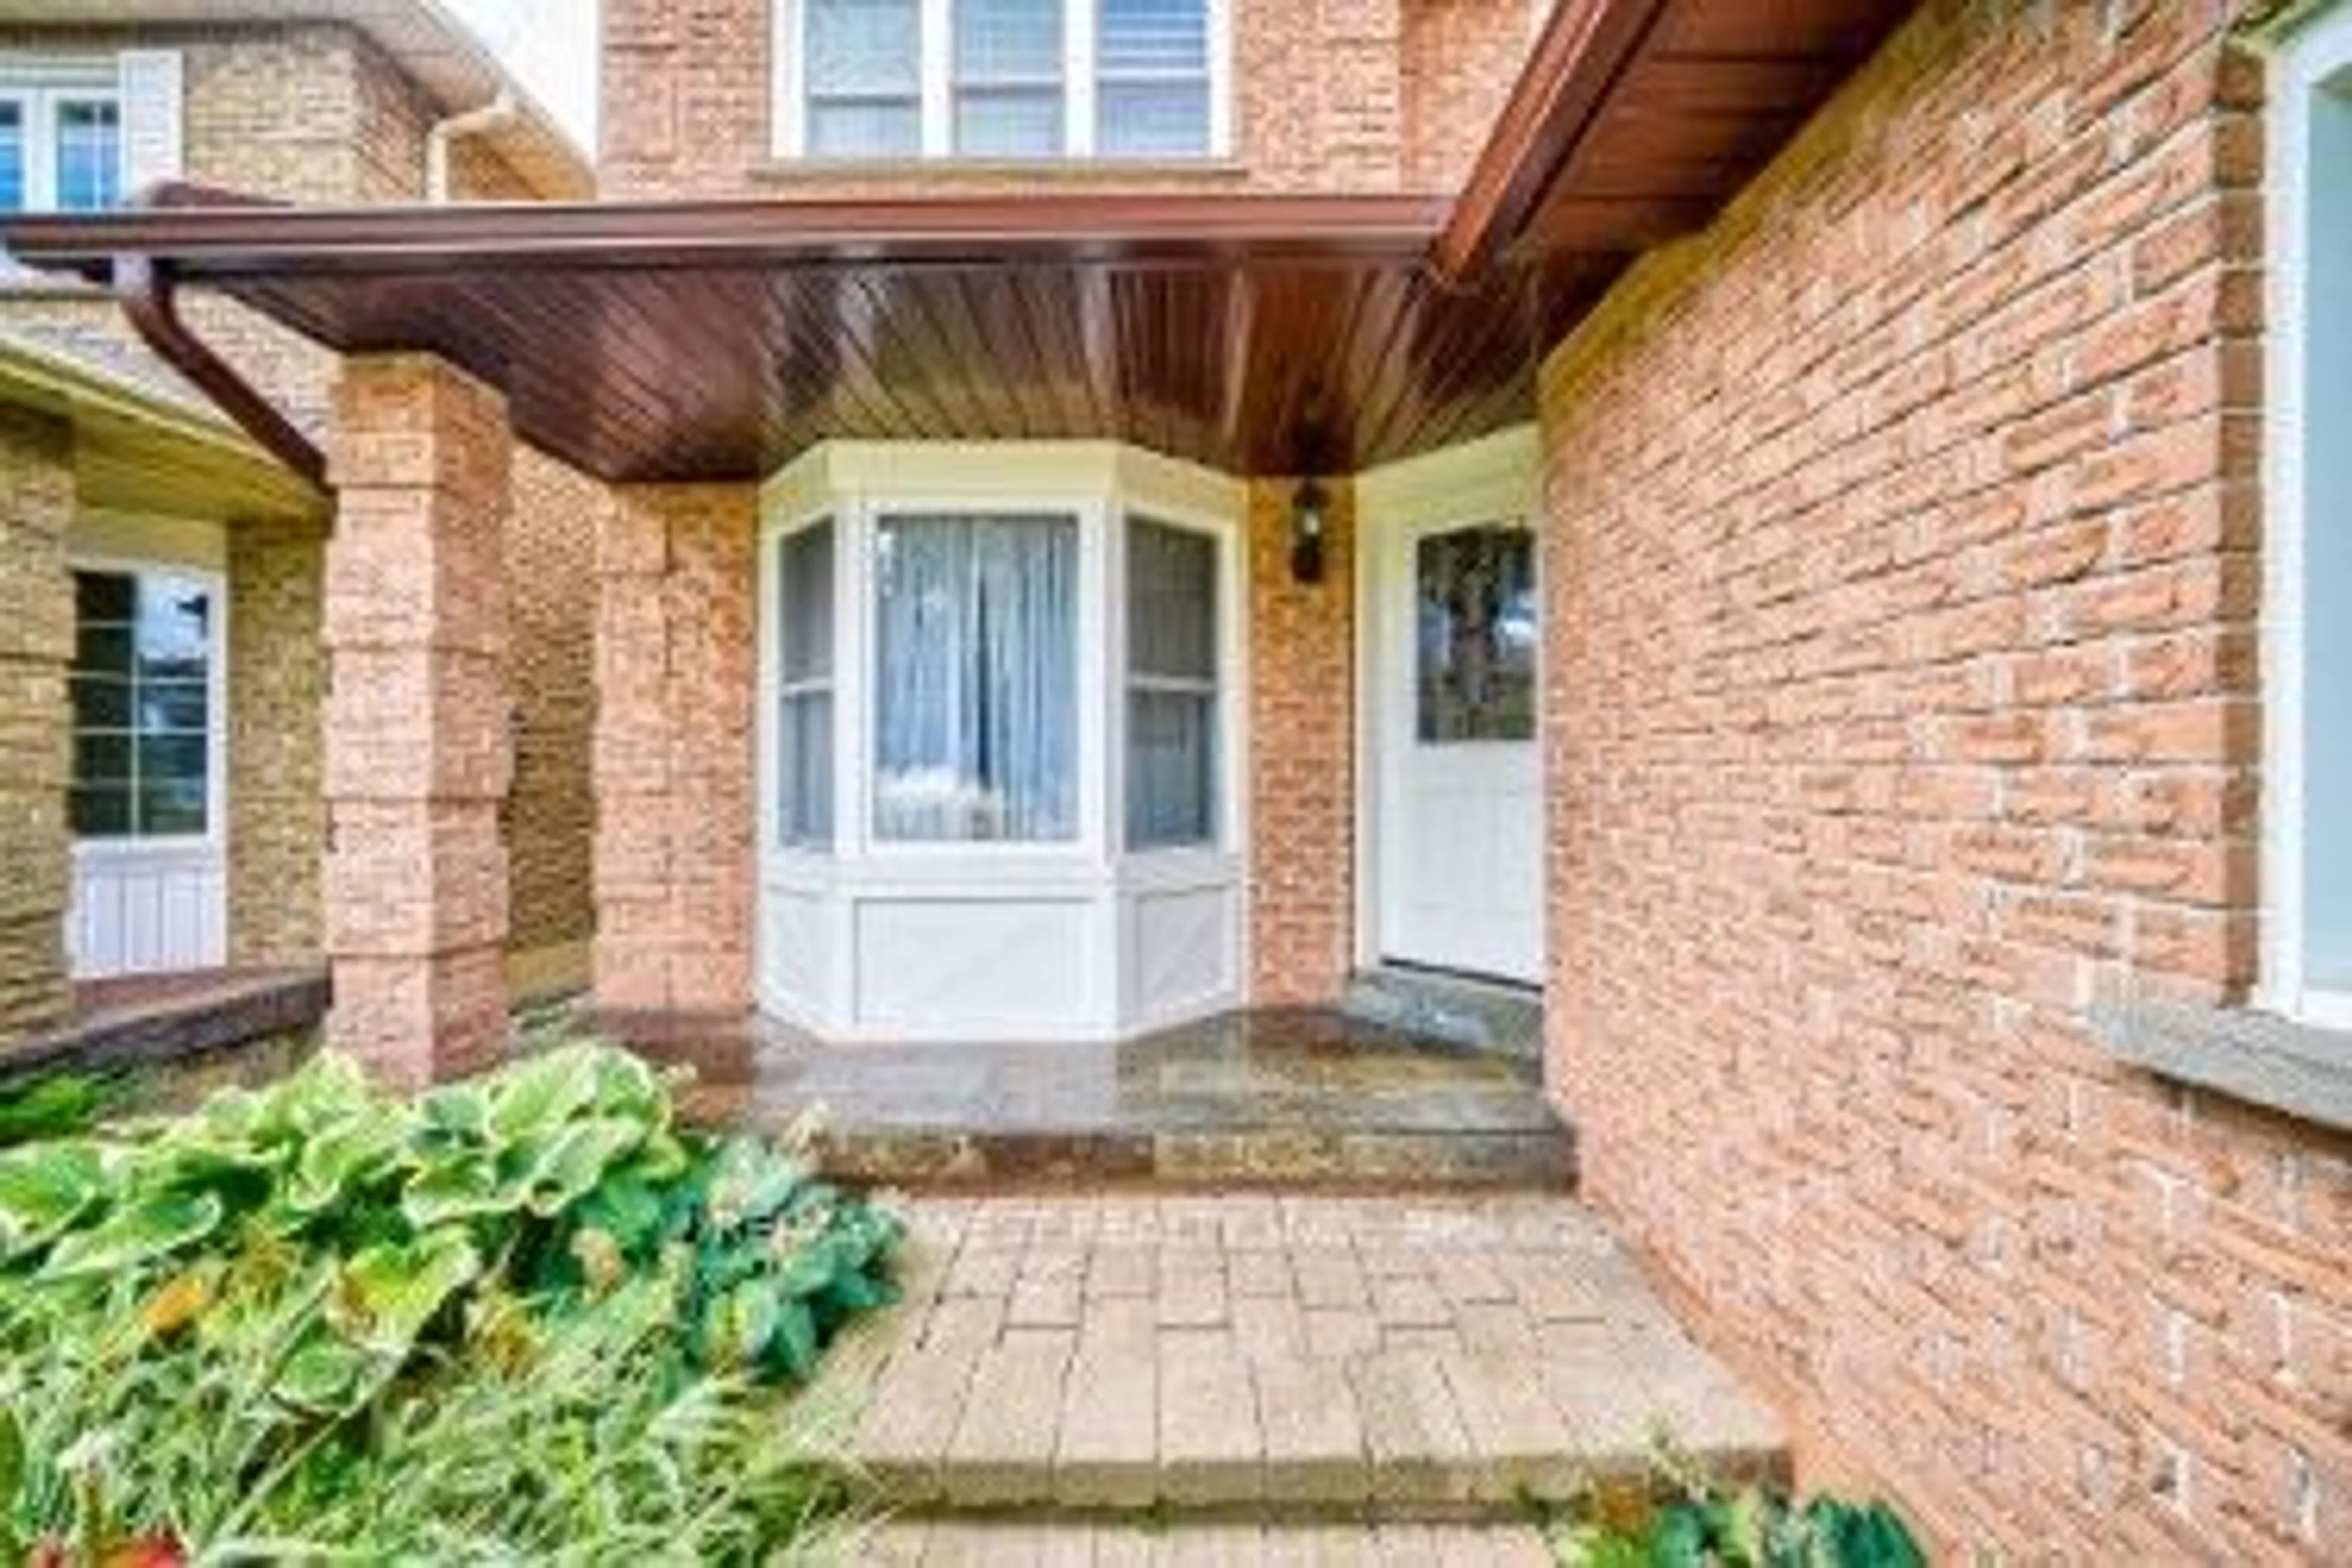 Home with brick exterior material for 97 Grover Dr, Toronto Ontario M1C 4W1